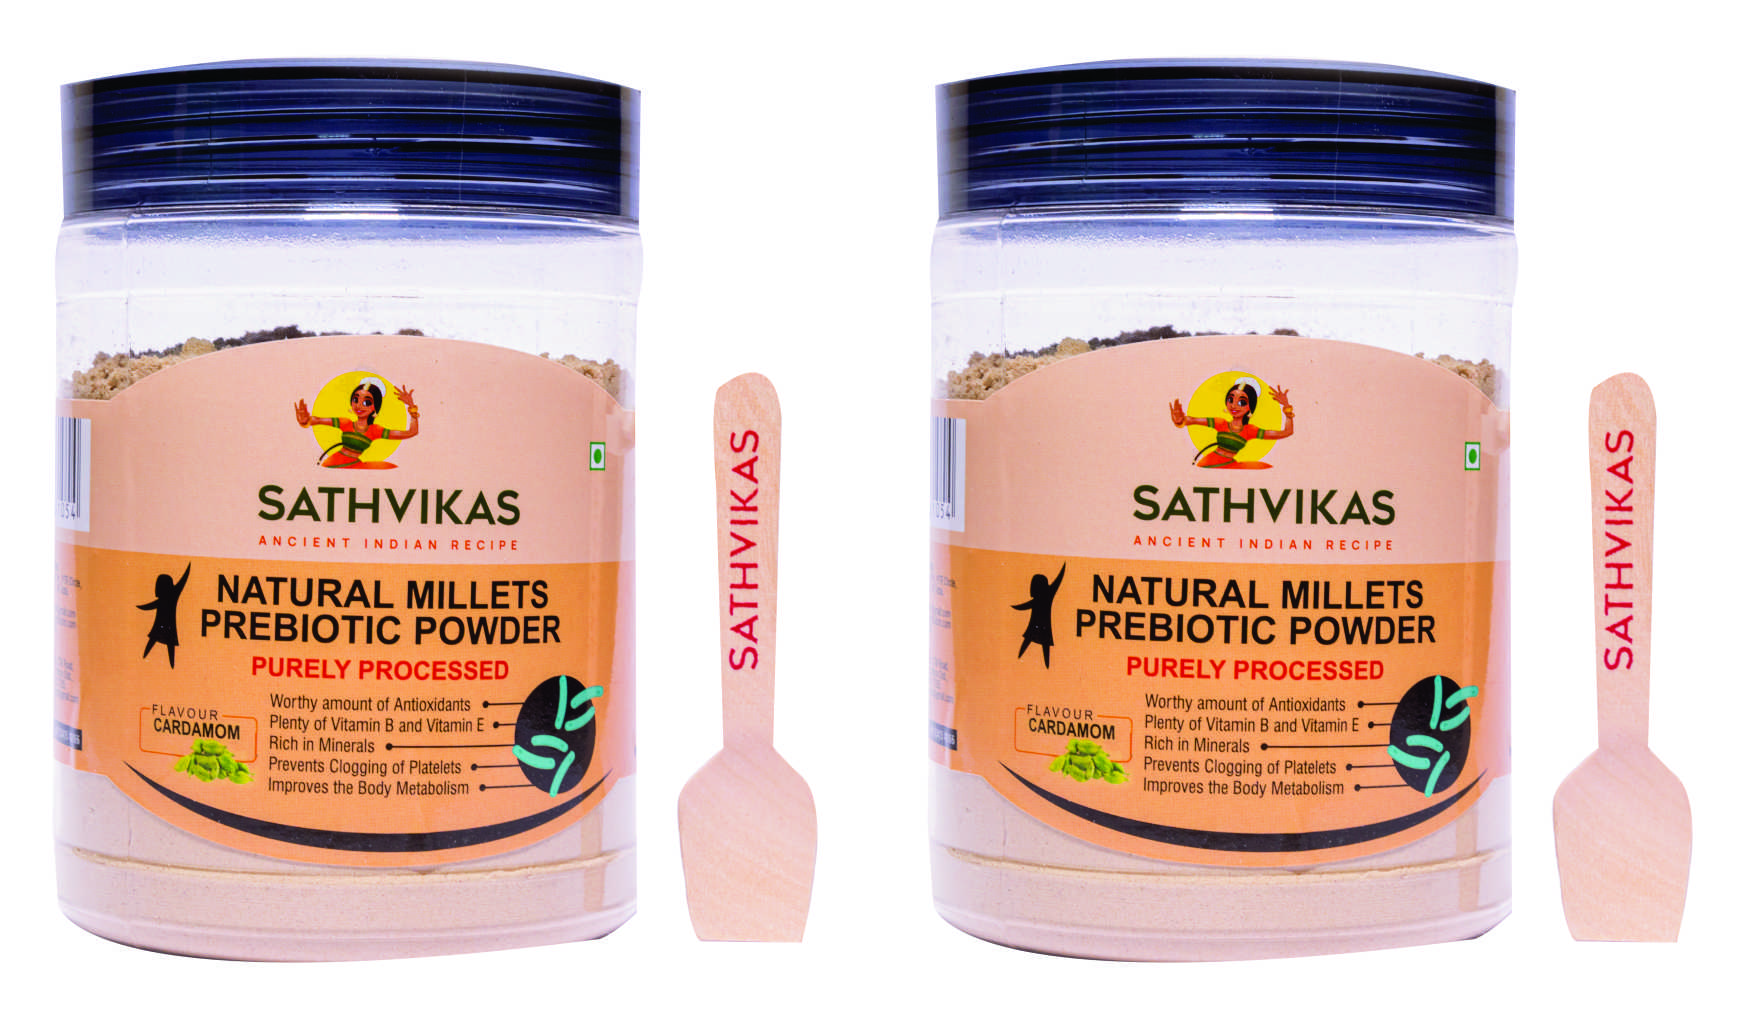 Sathvikas Natural Millets Prebiotic Powder (Cardamom Flavour) 500 Grams Pack Of 2.